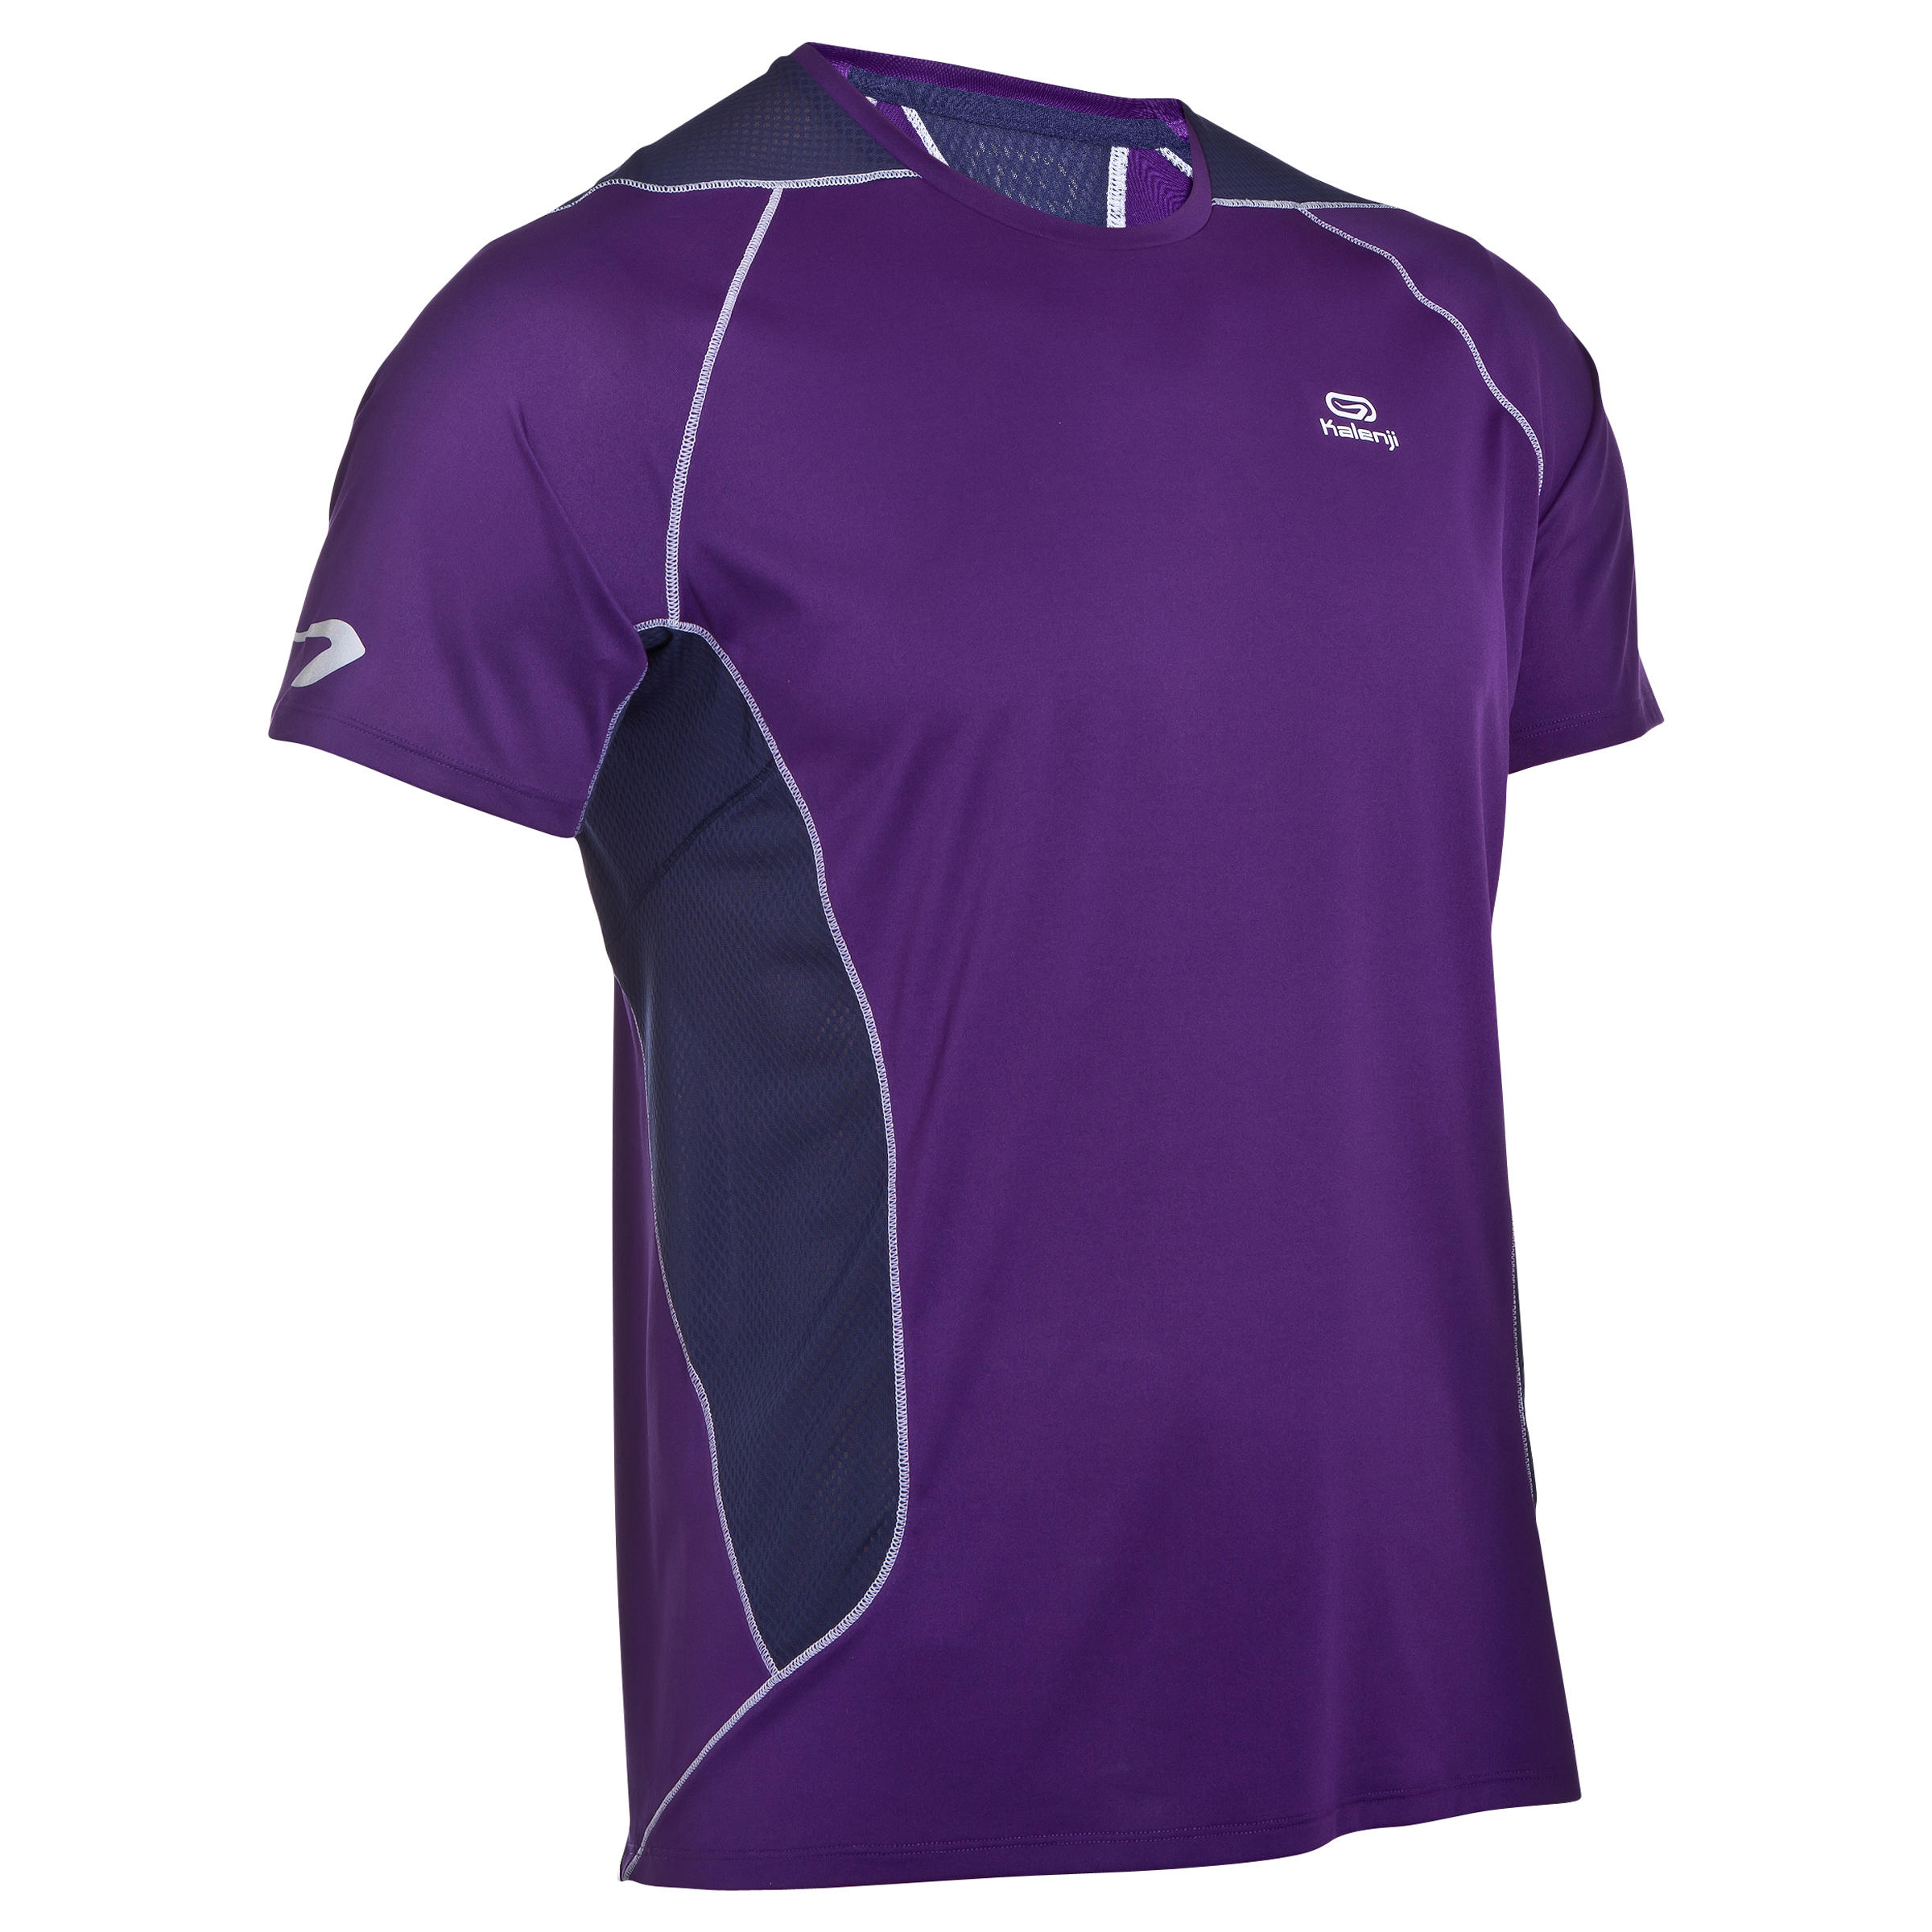 KALENJI Eliofeel Men's Running T-shirt - purple